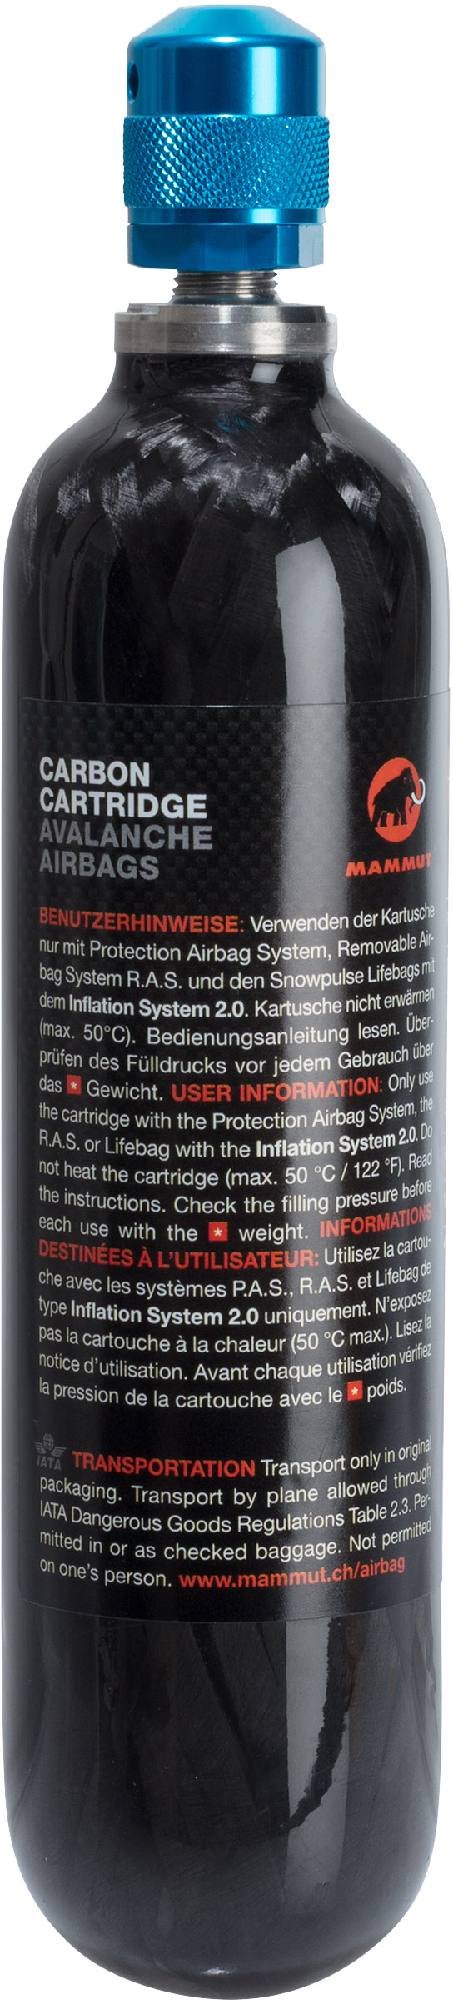 Mammut Carbon Cartridge Non-Refillable